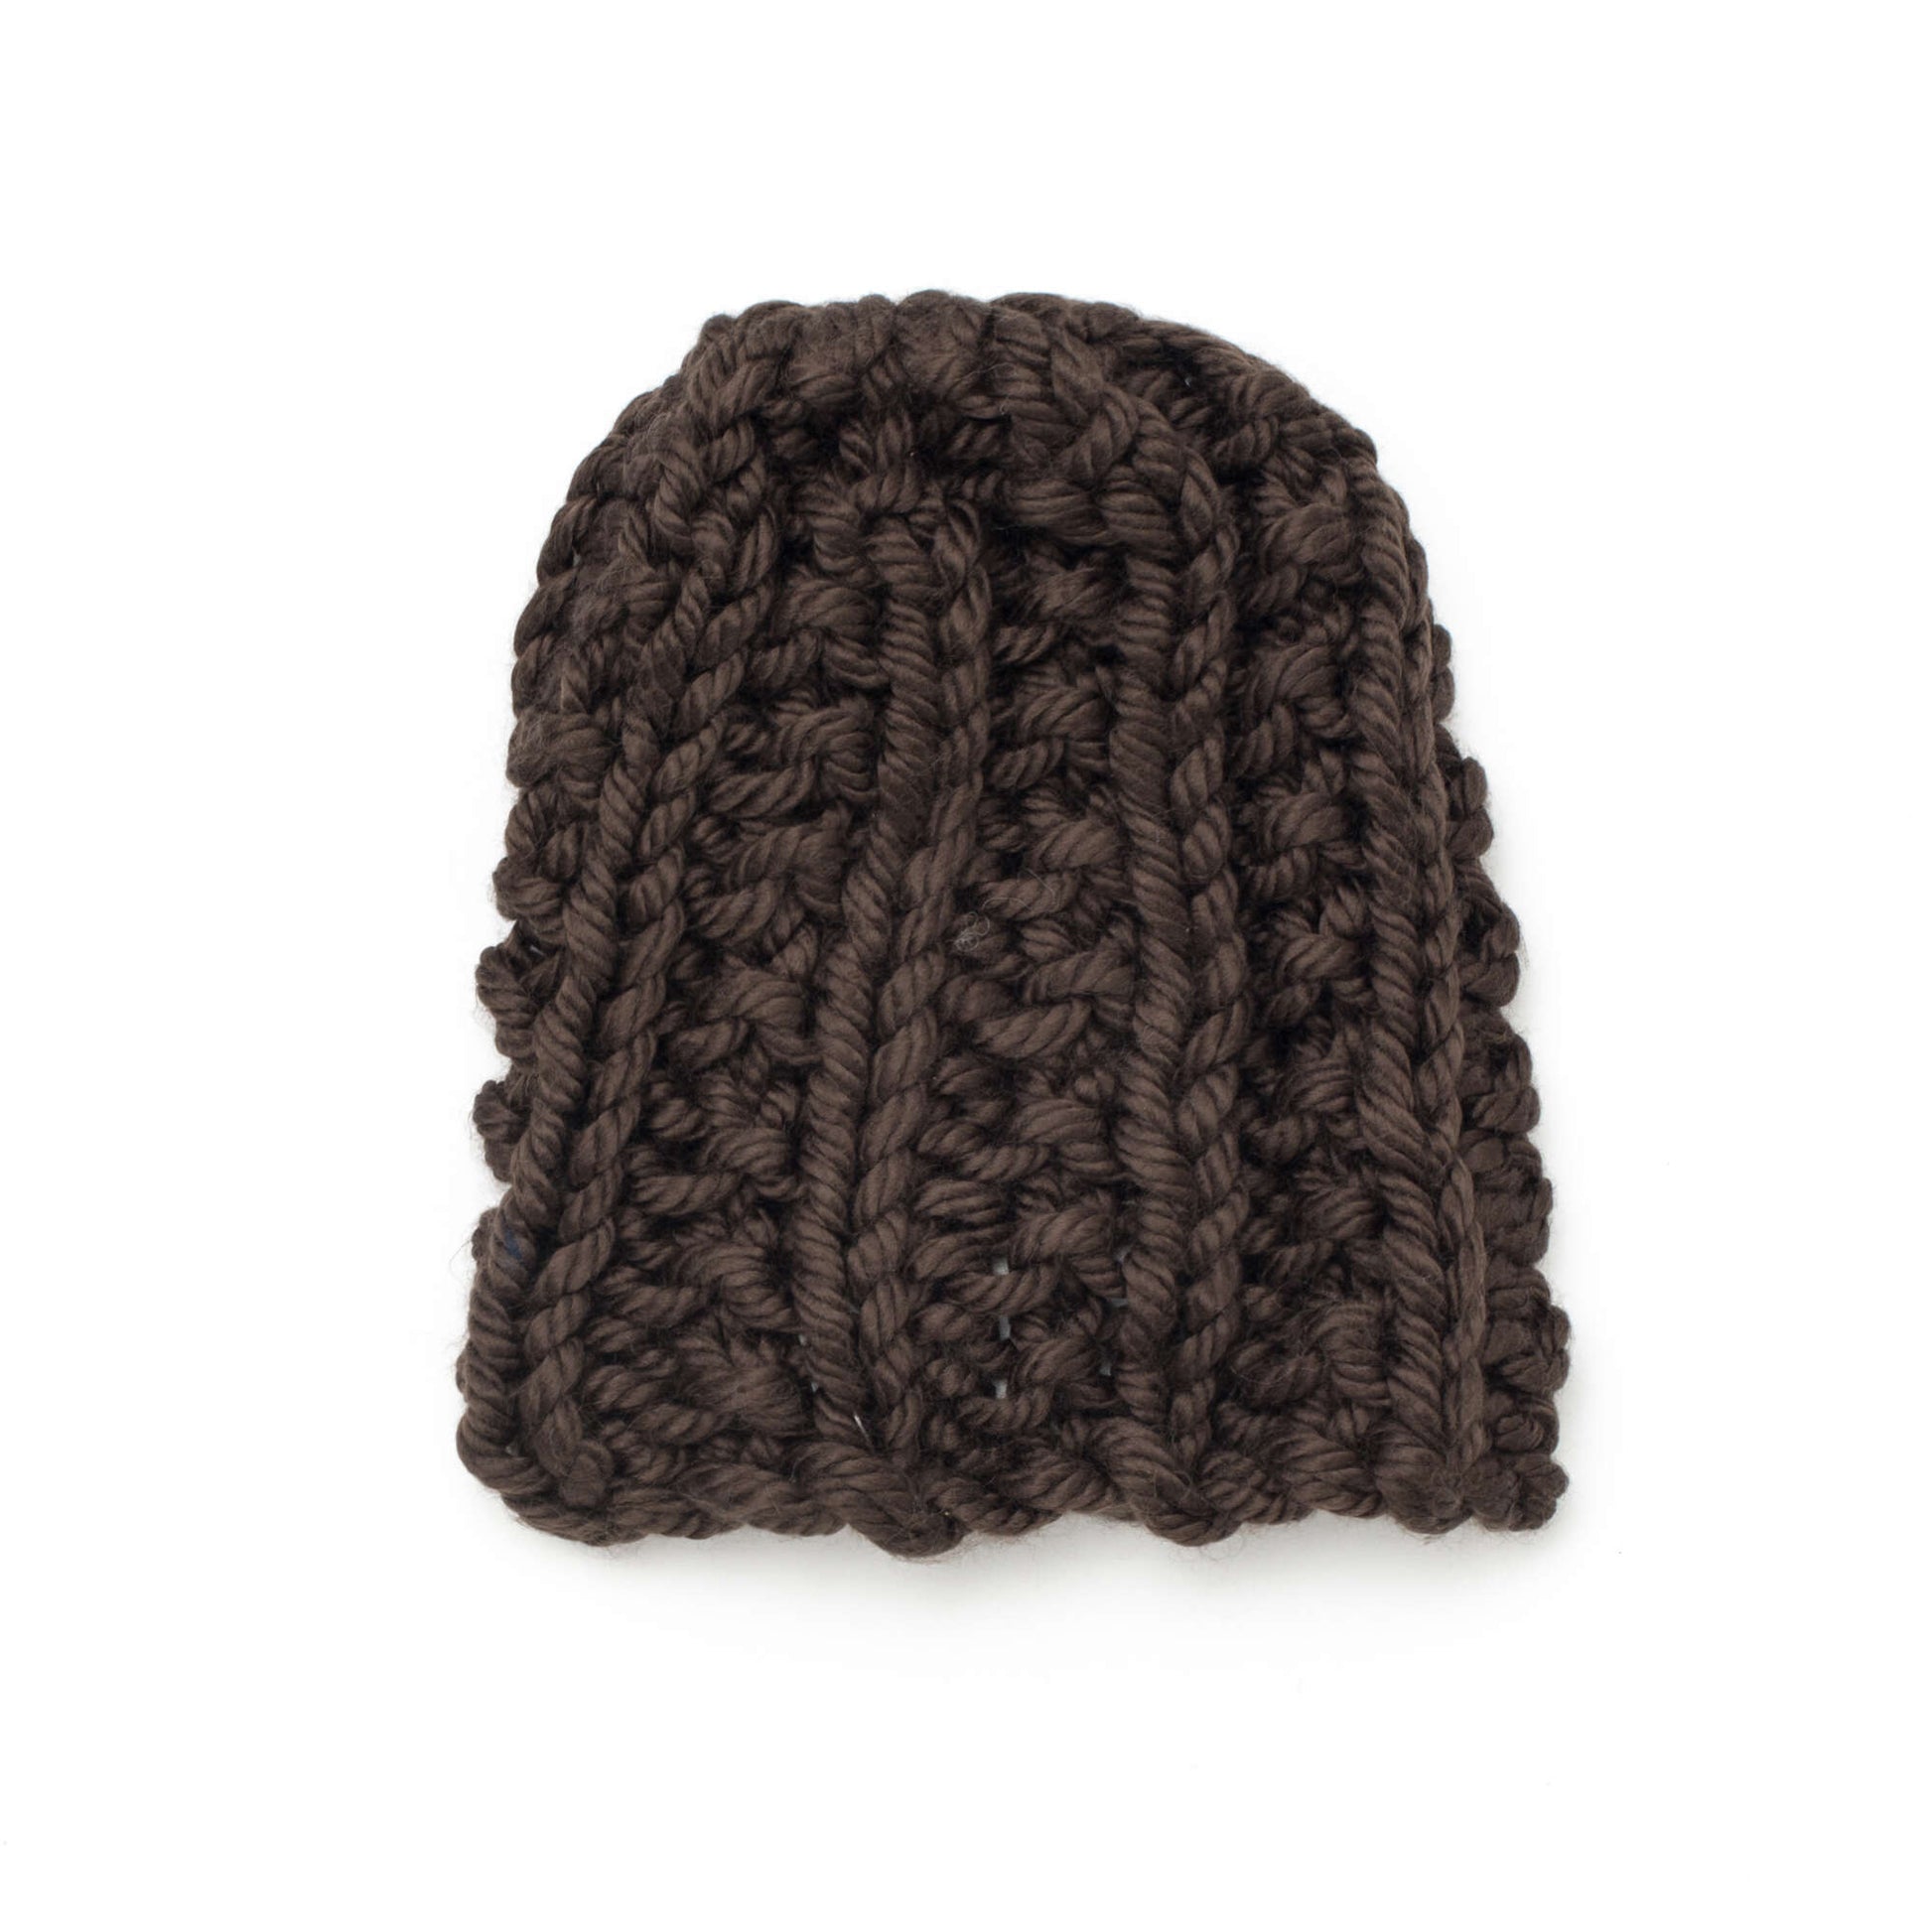 Bernat Big Textures Hat Knit Hat made in Bernat Mega Bulky yarn